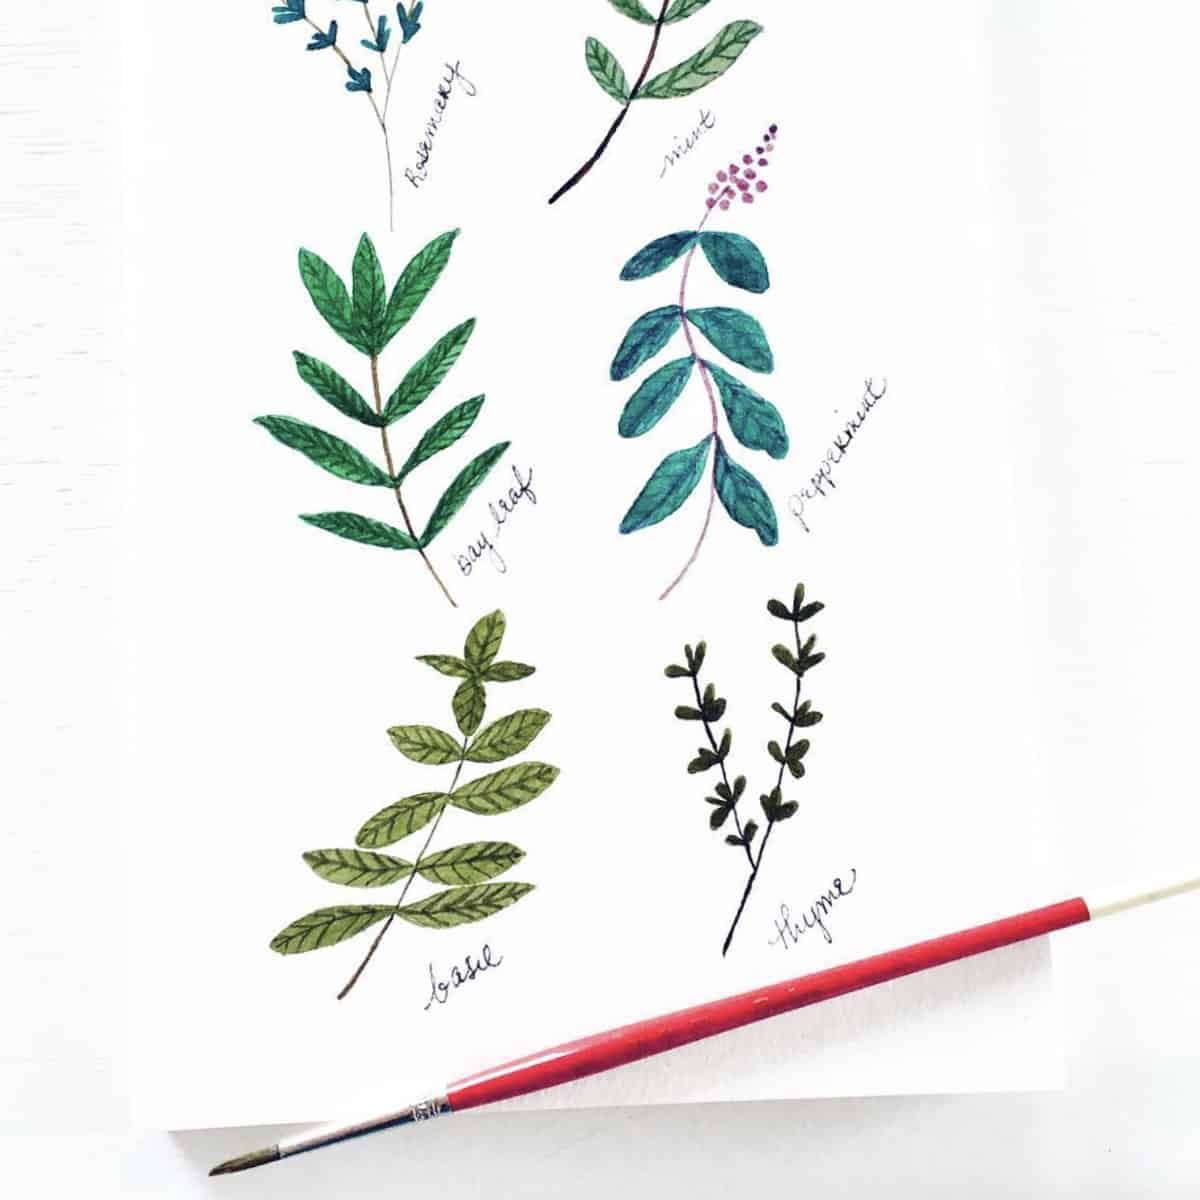 vegan art watercolor herbs painting and paint brush